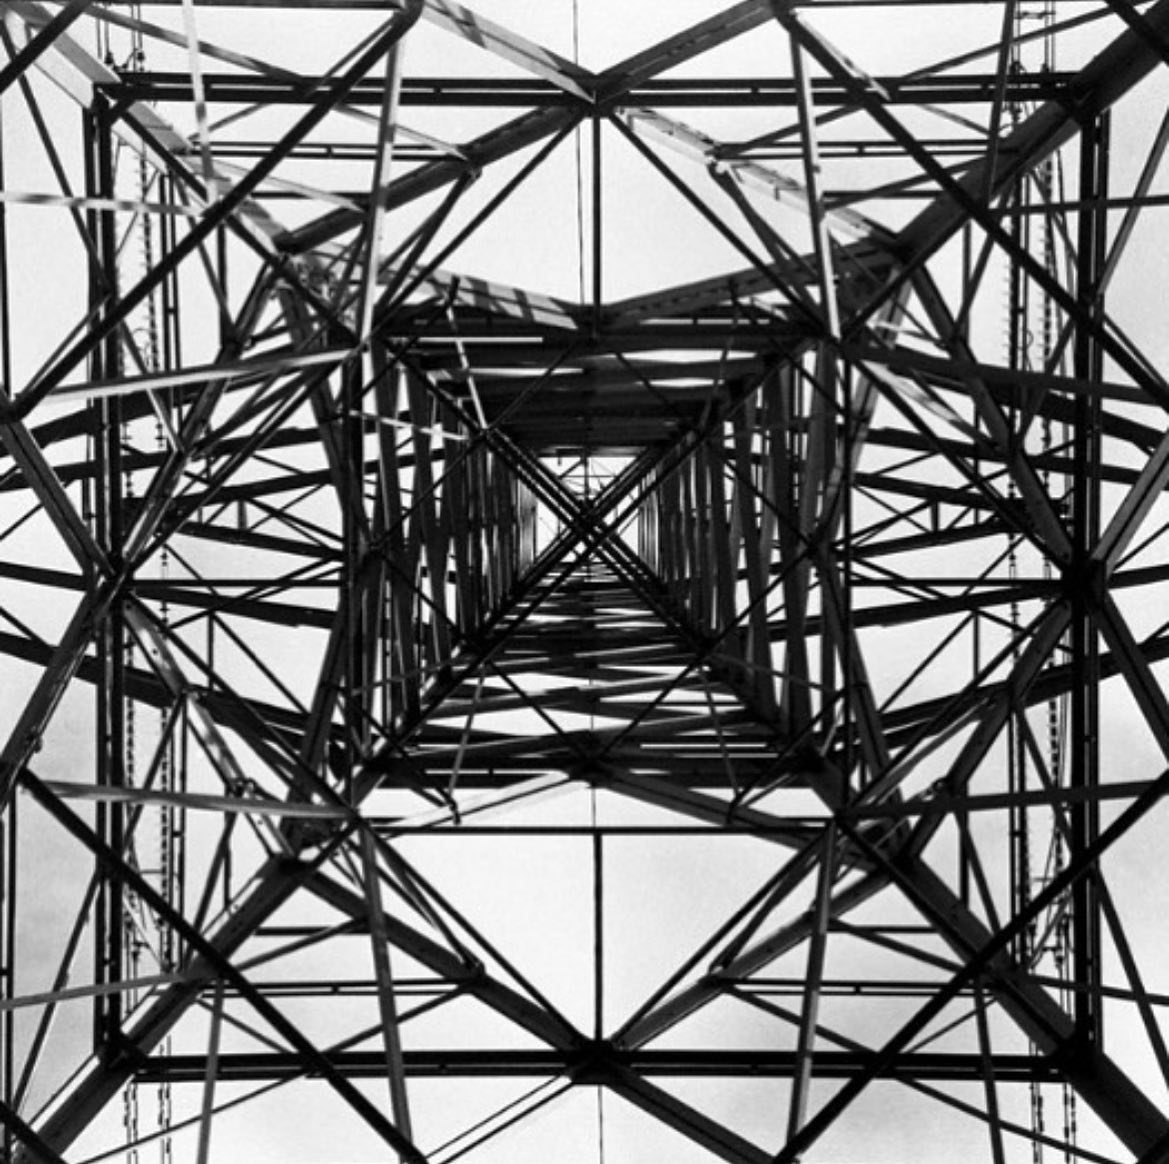 Photograph looking up a pylon